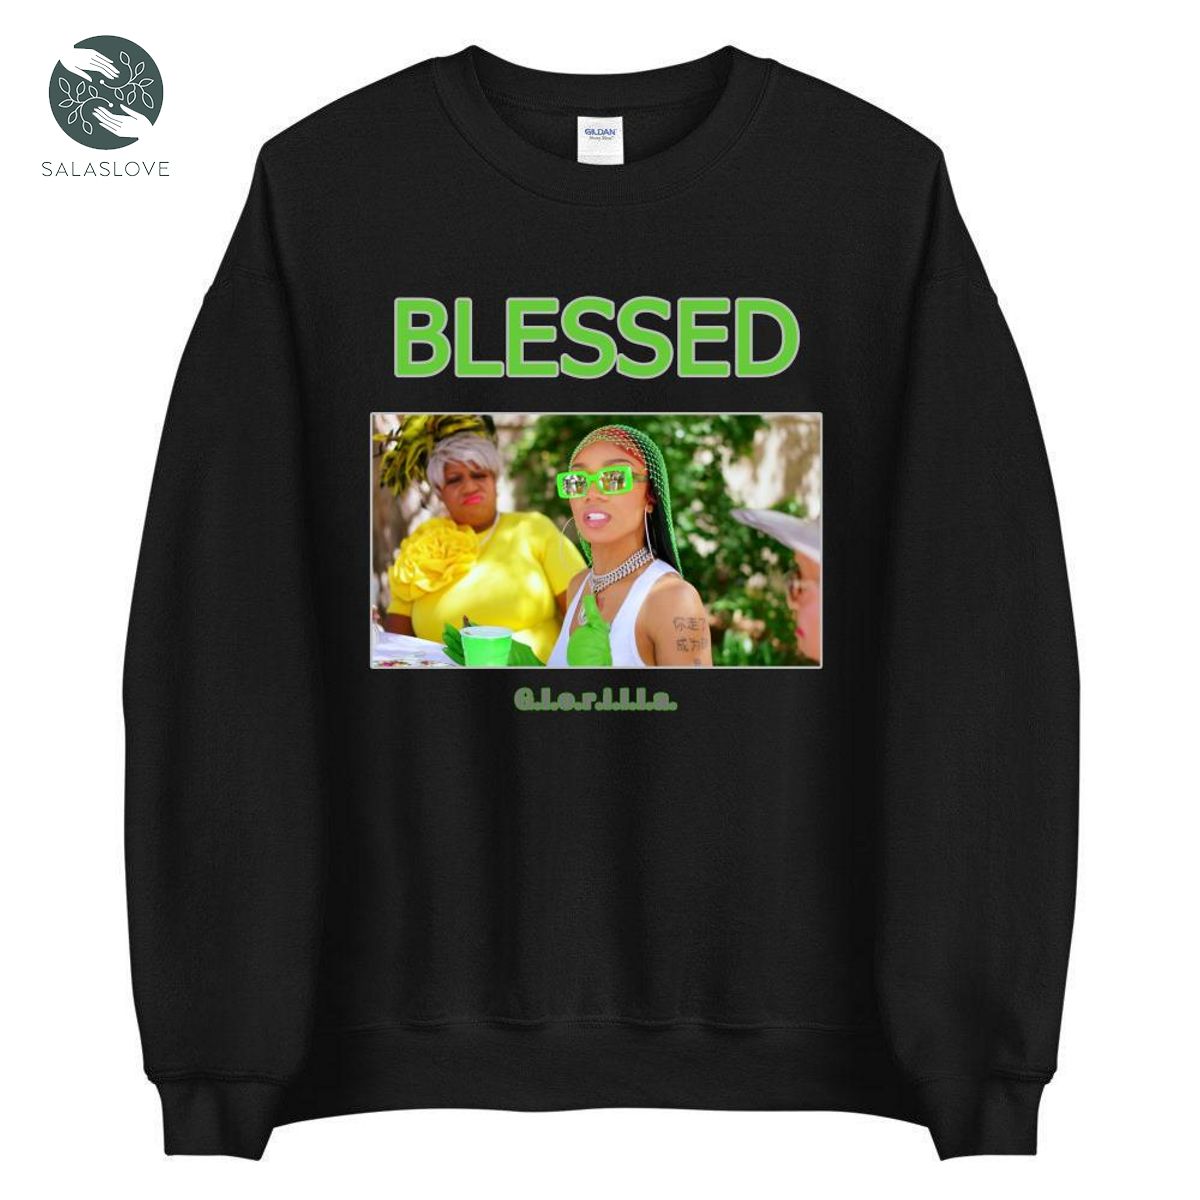 Blessed - Glorilla New Single Shirt